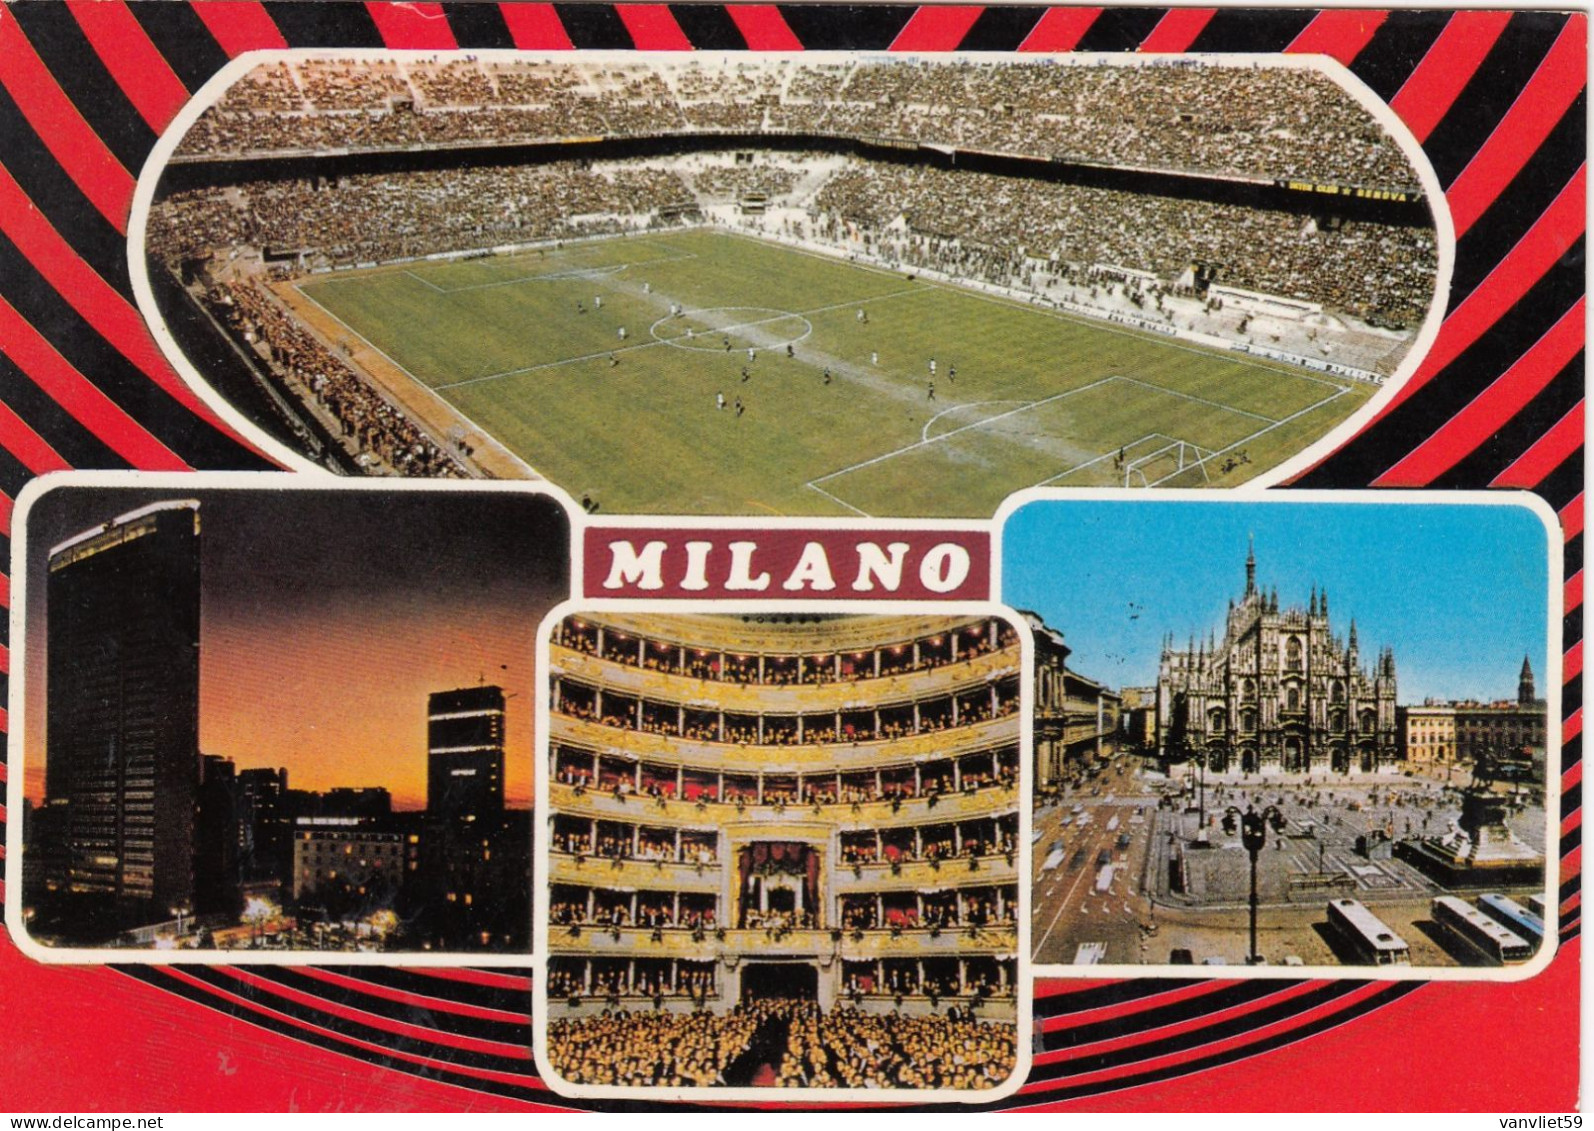 STADIO-STADE-STADIUM-ESTADIO-CAMPO SPORTIVO-SOCCER-FOOTBALL- 3 CARTOLINE MILANO-TORINO- VERA FOTO-2 VIAGGIATE 1968-1996 - Soccer